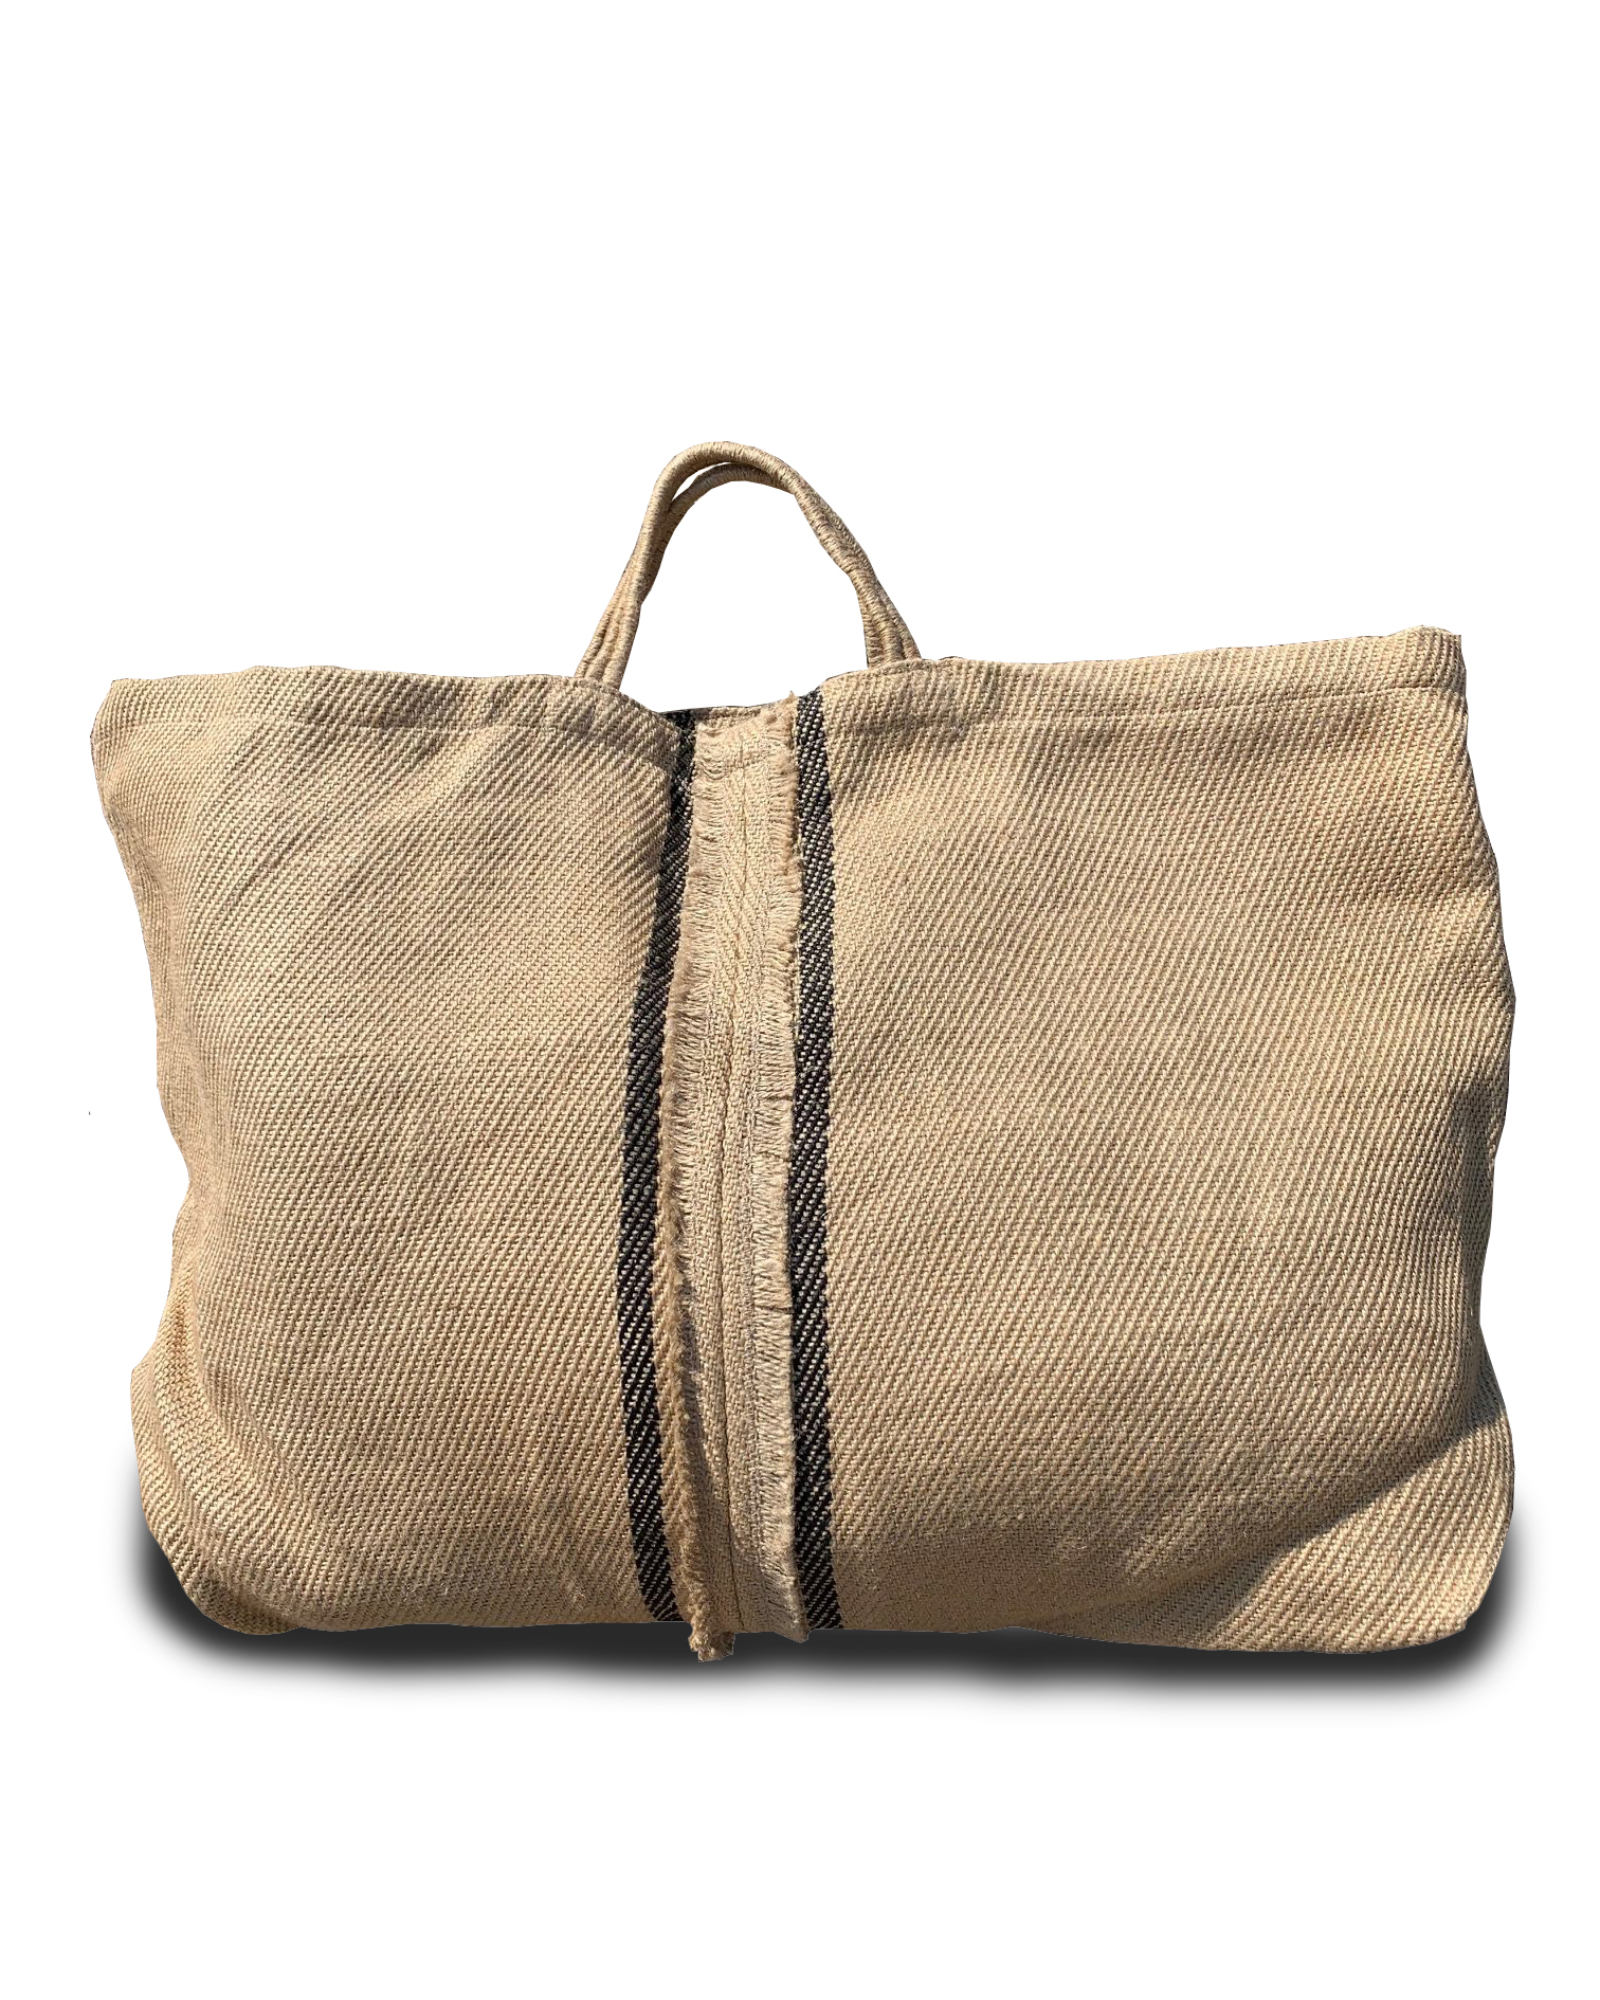 Bag JUTE XL Natural with fringing detail